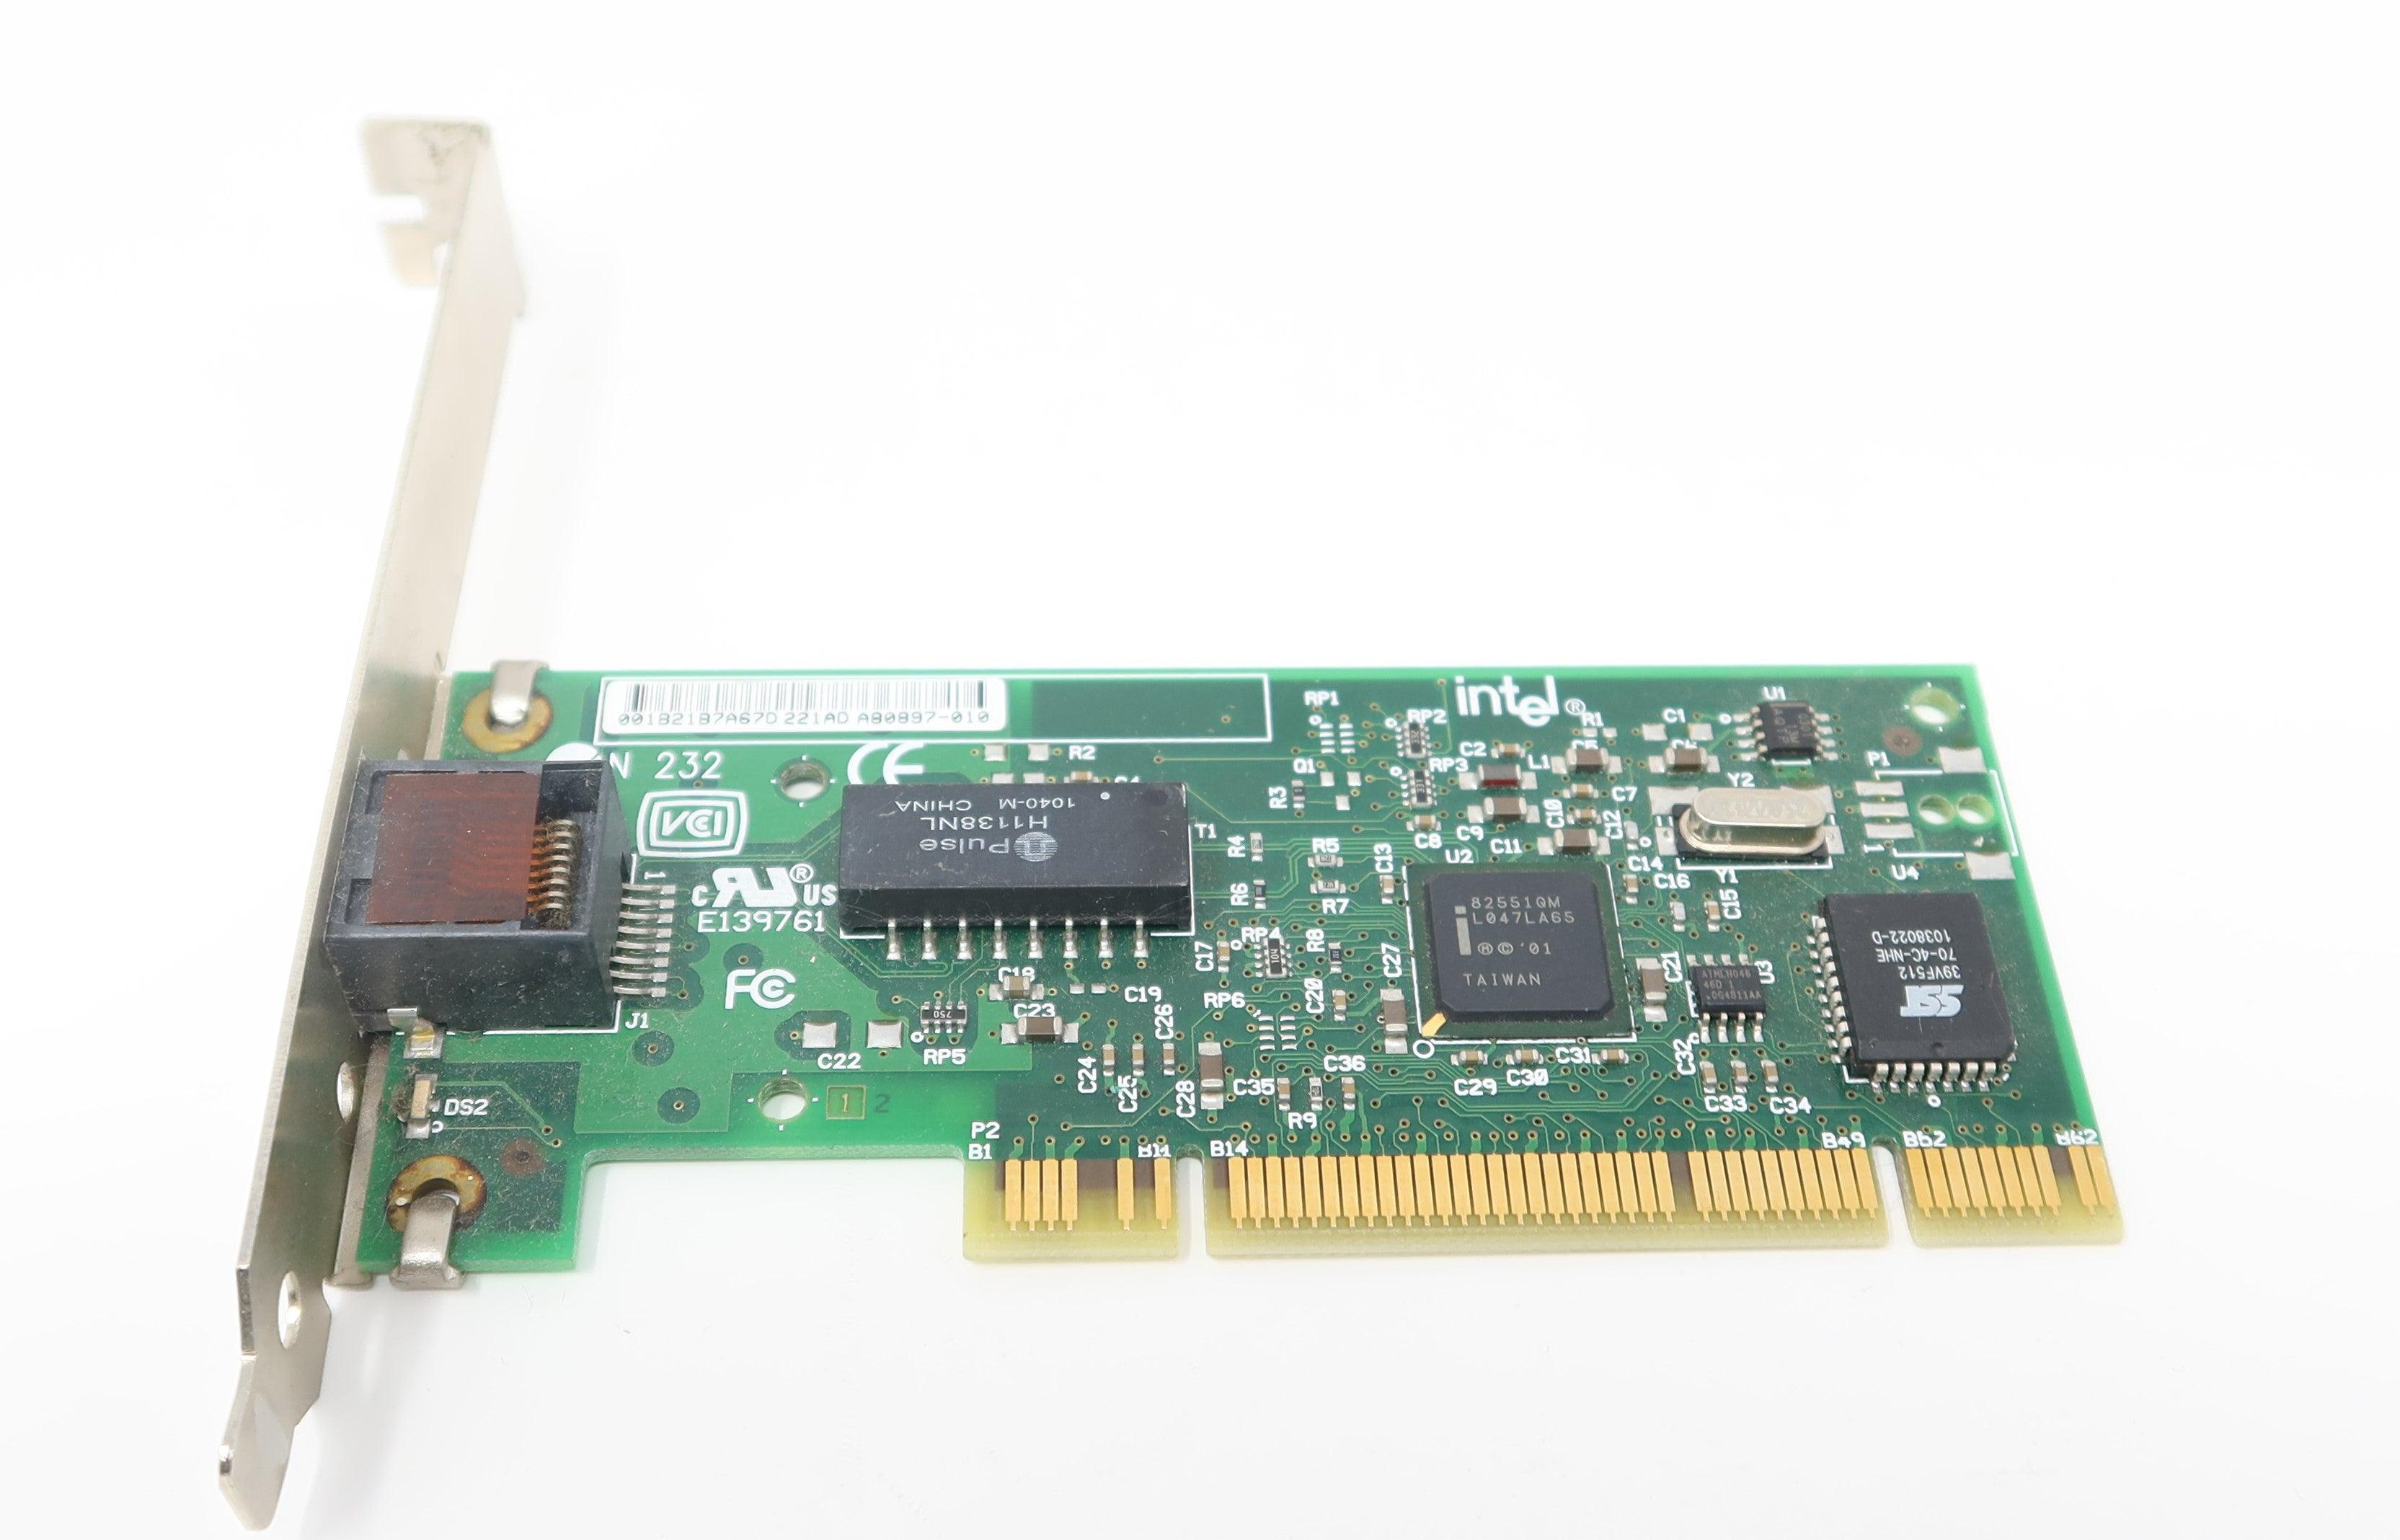 Intel Pro 100 PILA8460MBLK20 Network Adapter Single-Port RJ-45 Fast Ethernet PCI